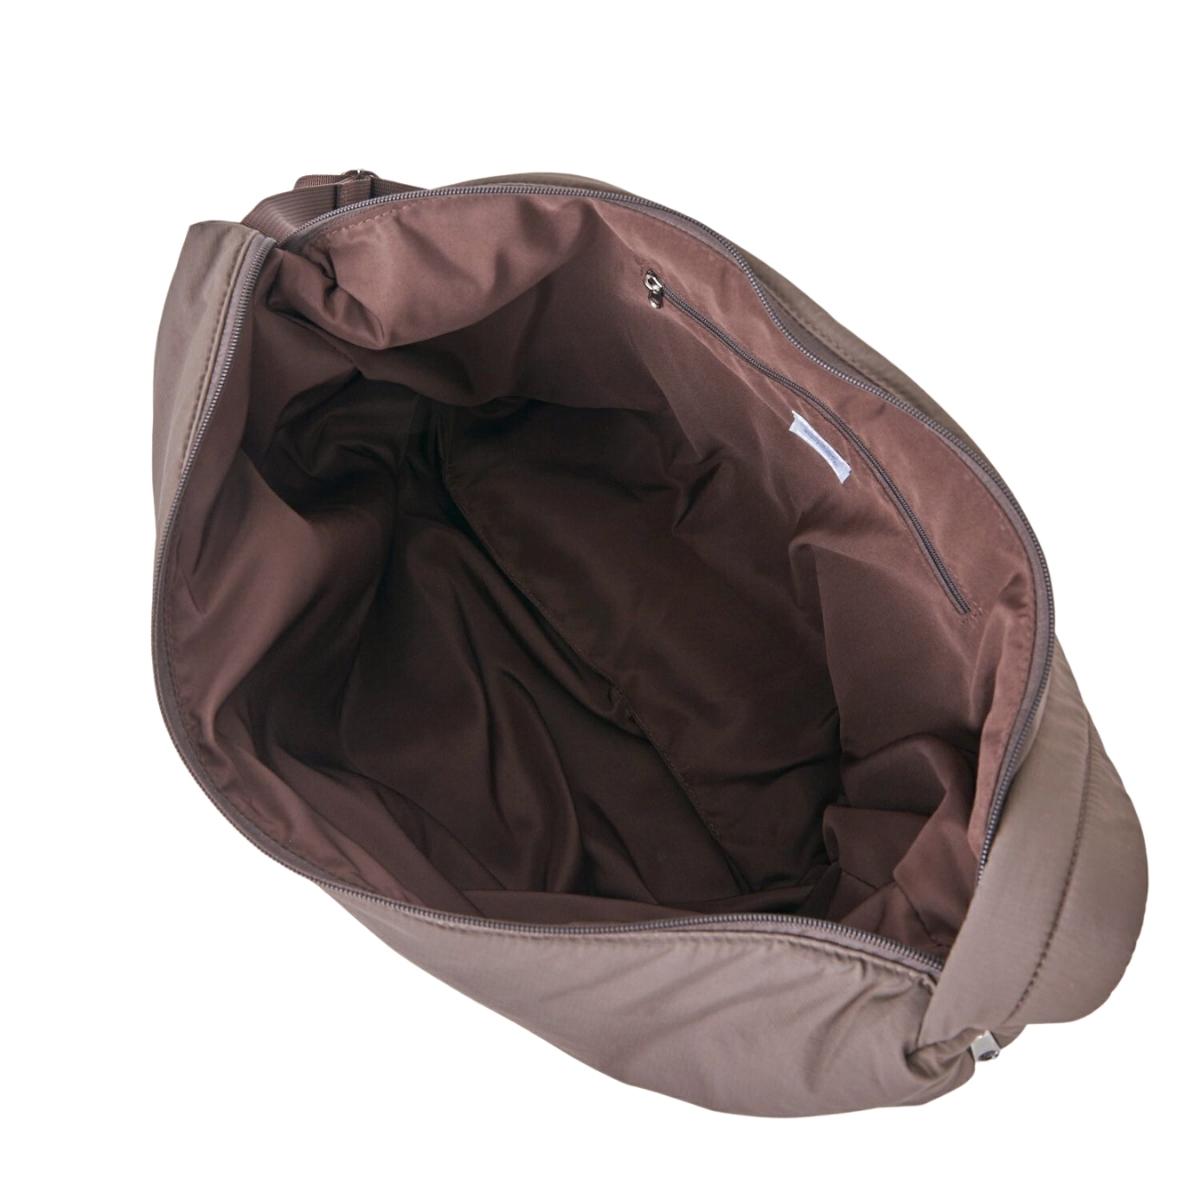 Anello Legato Cloud Hammock Bag Large in Brown